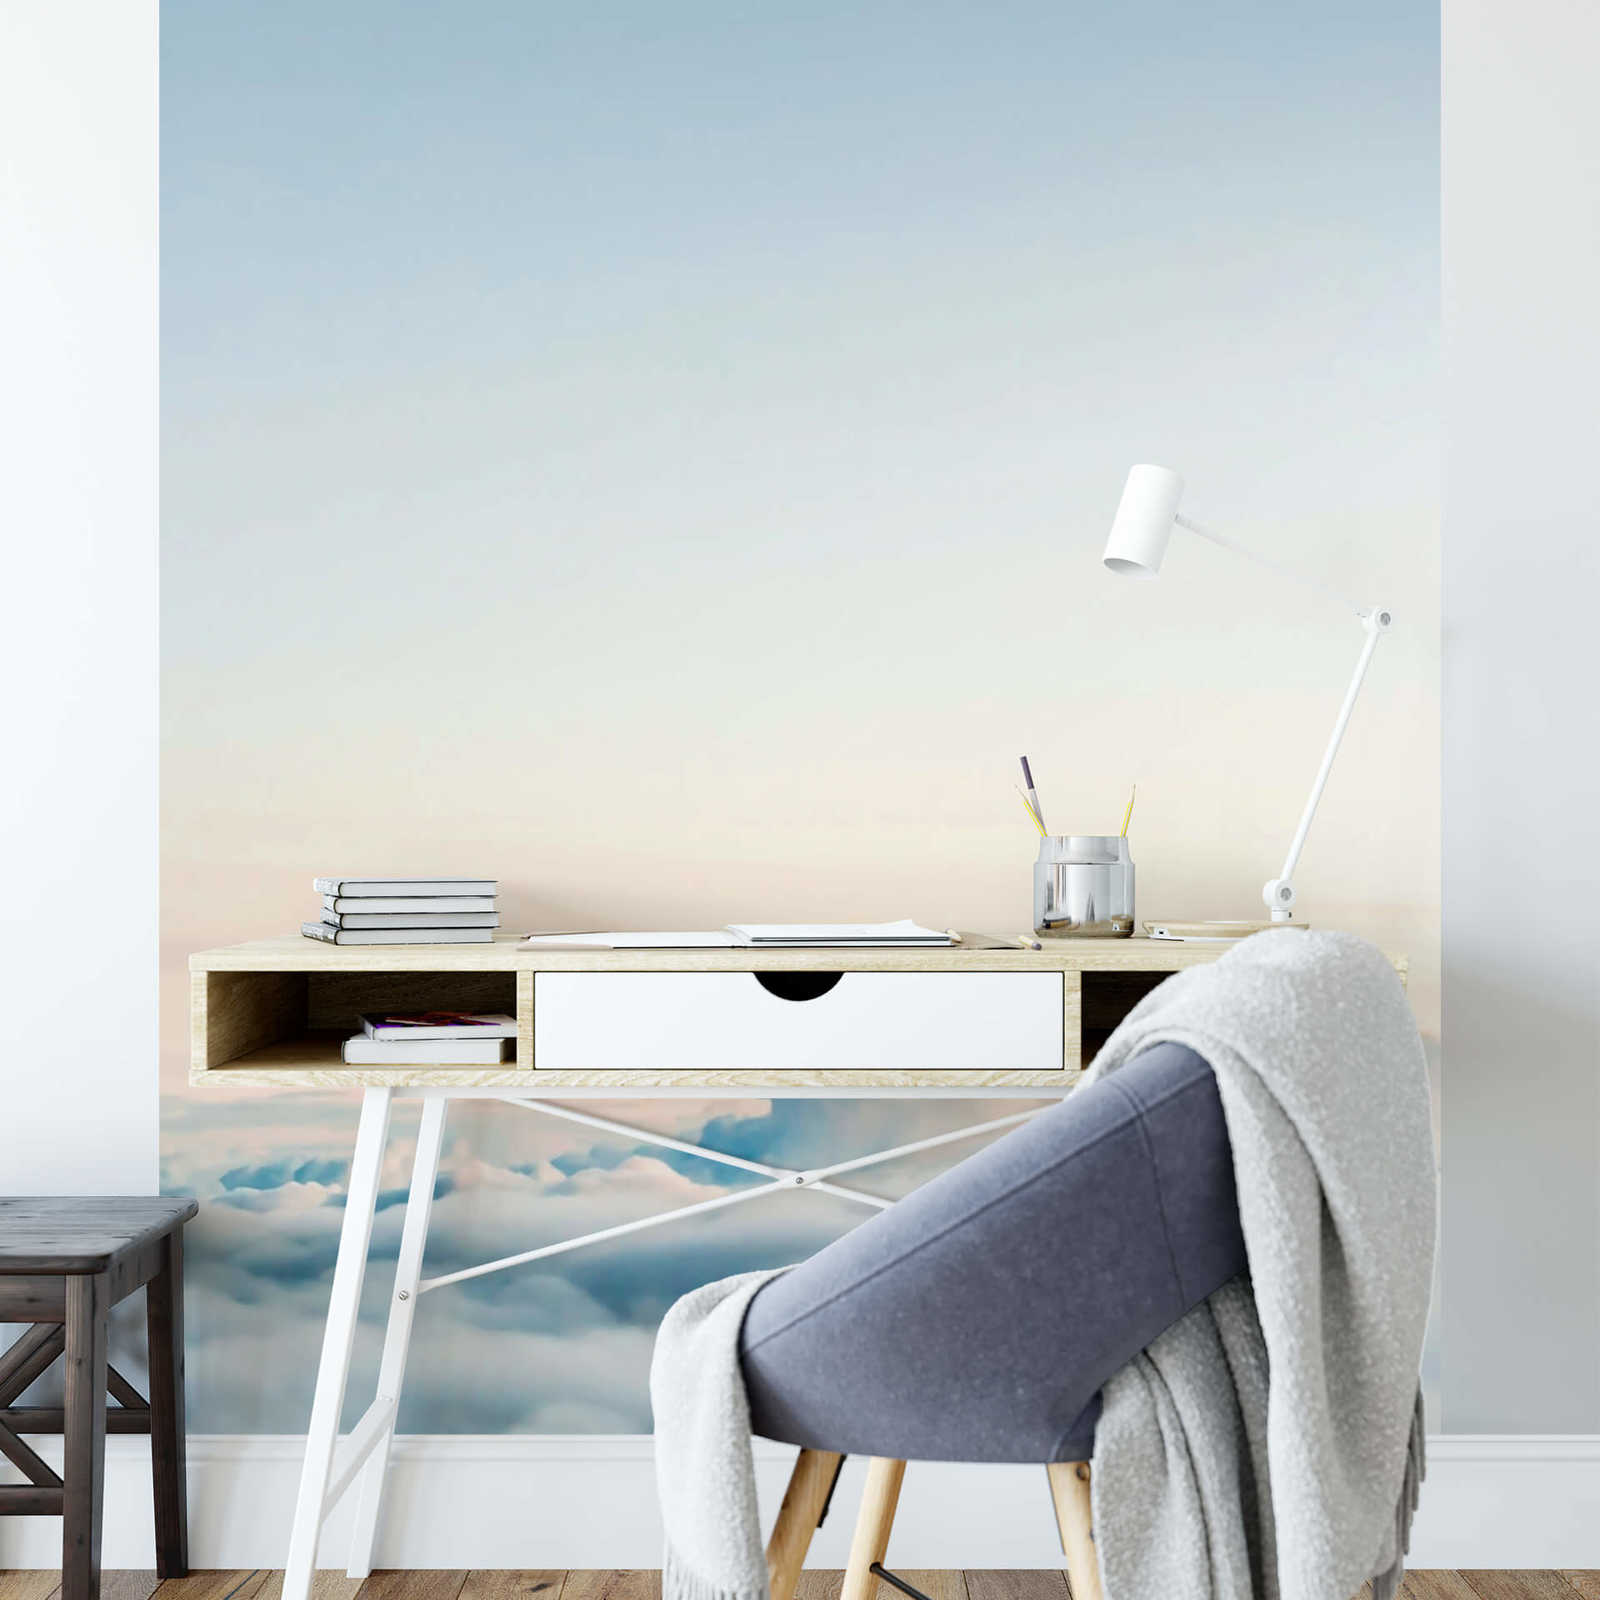             Photo wallpaper narrow sky - blue, white
        